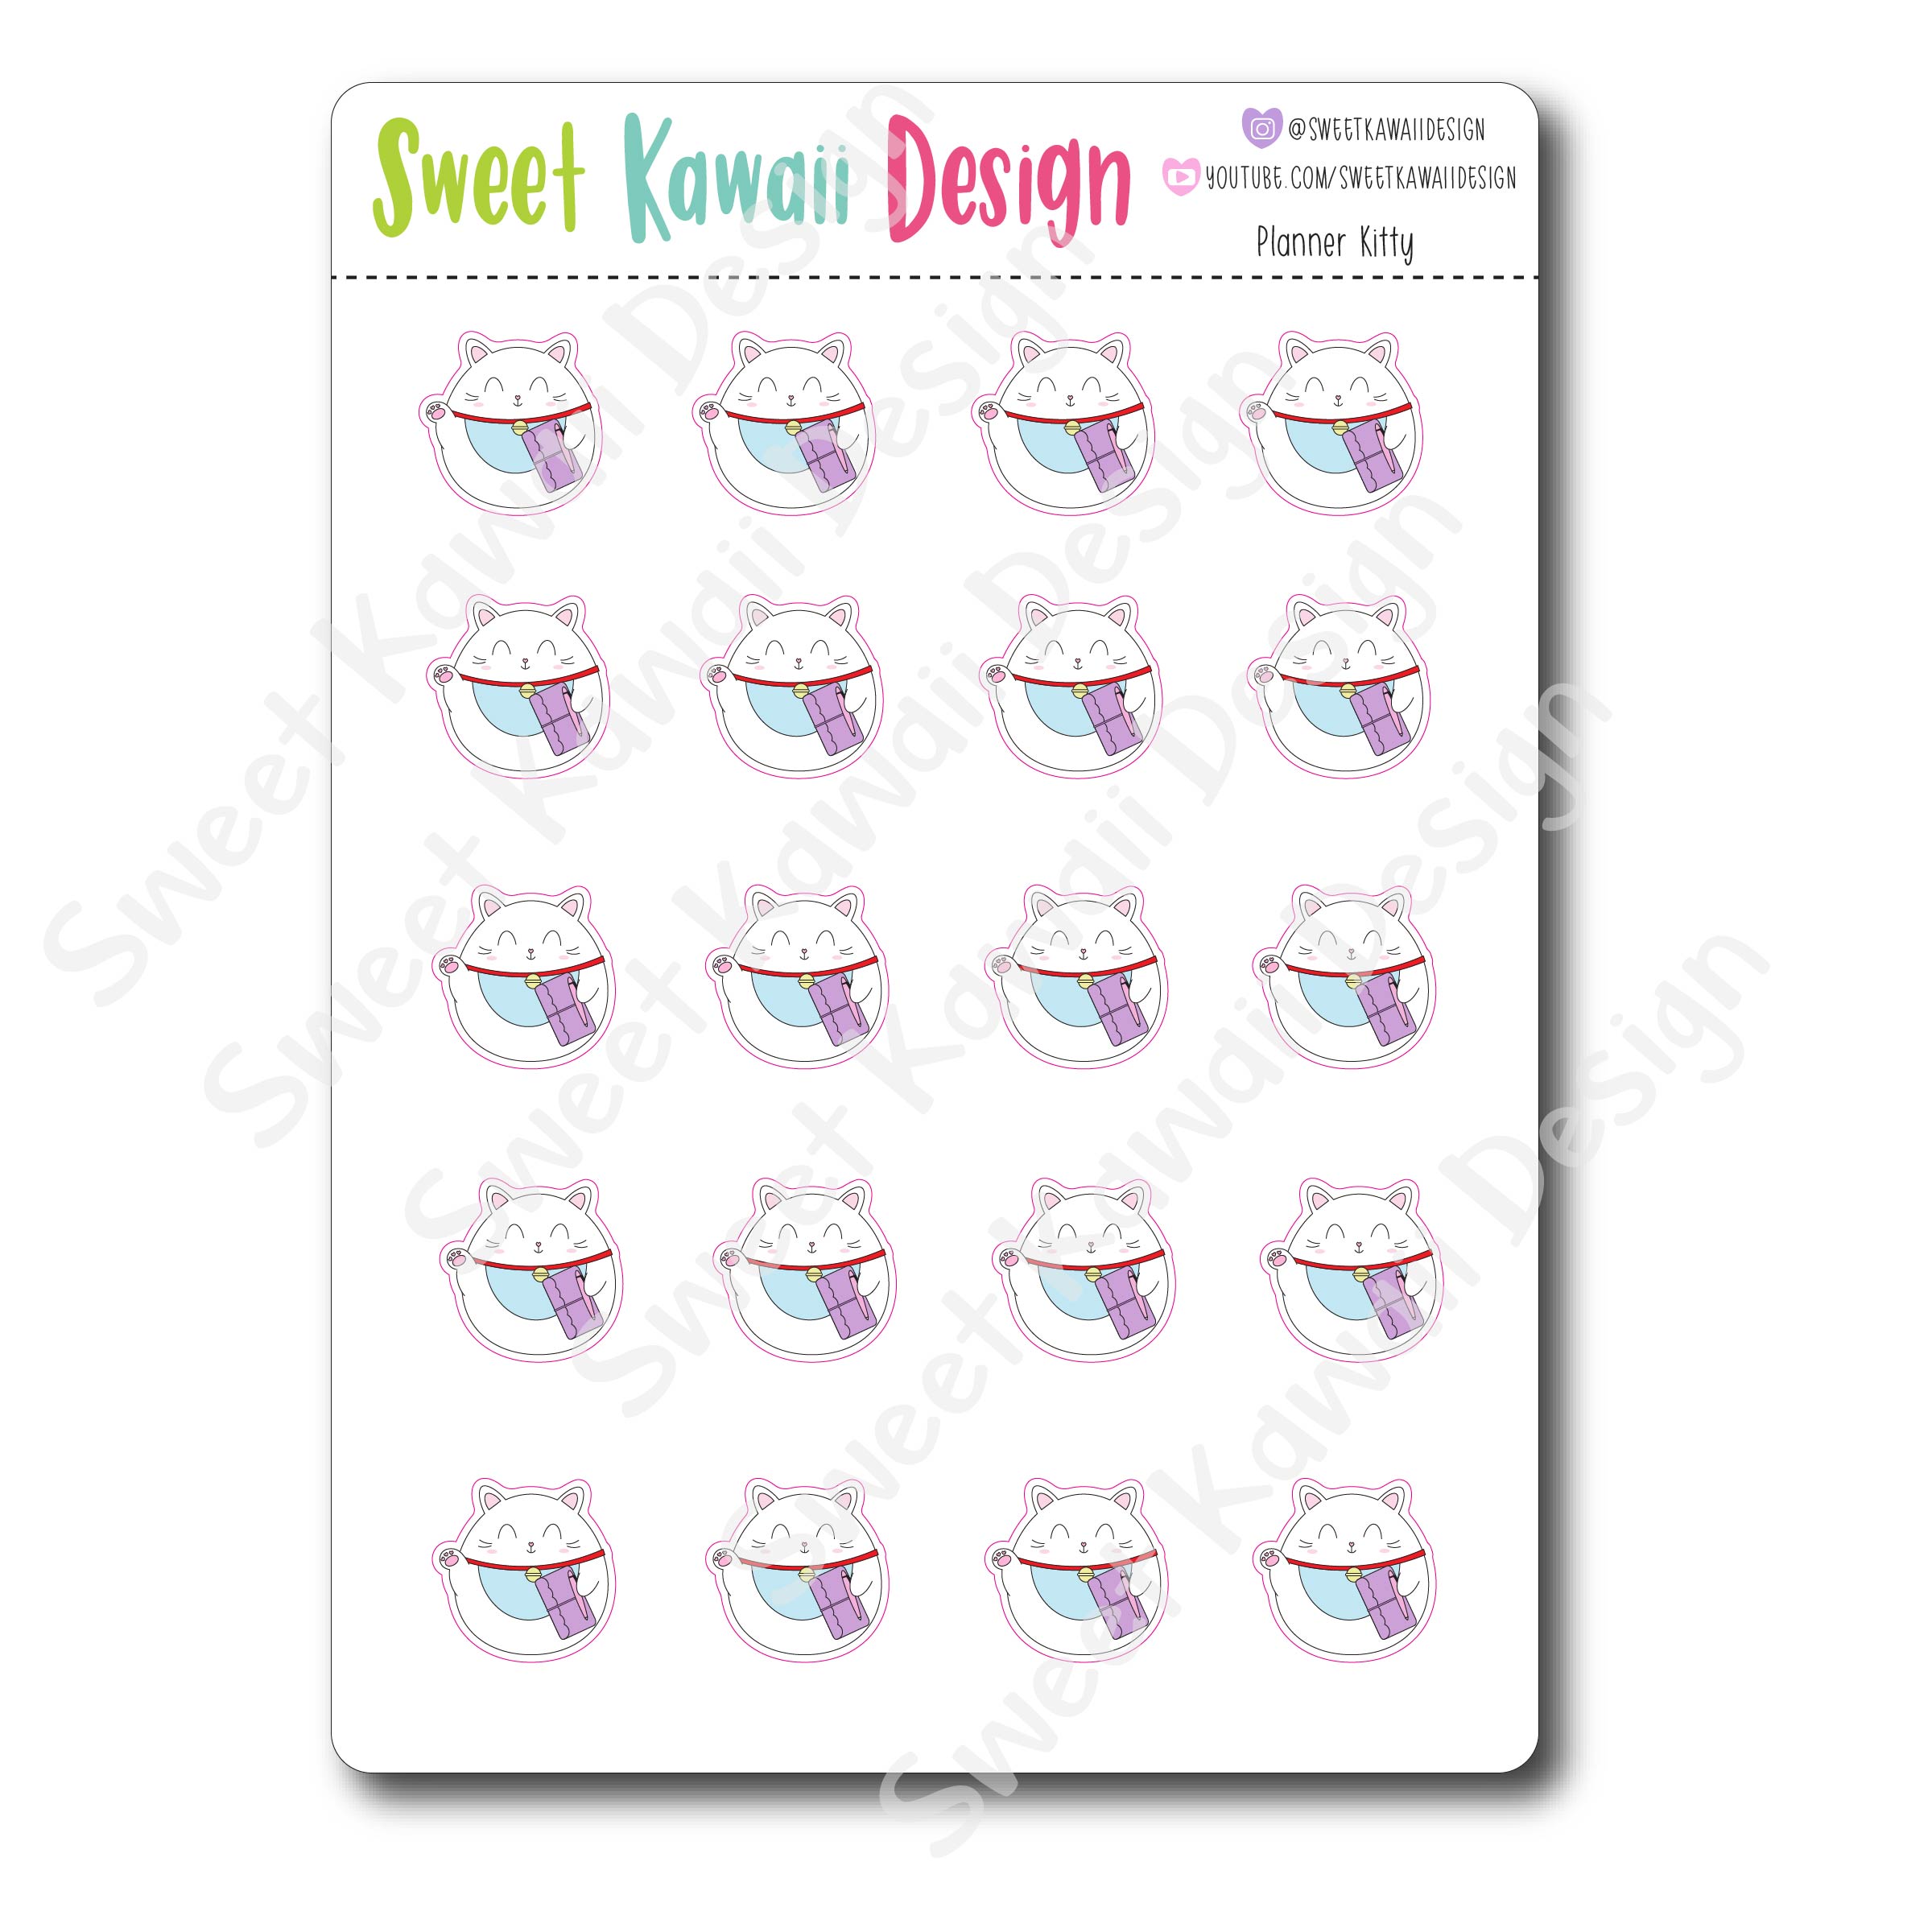 Kawaii Planner Kitty Stickers